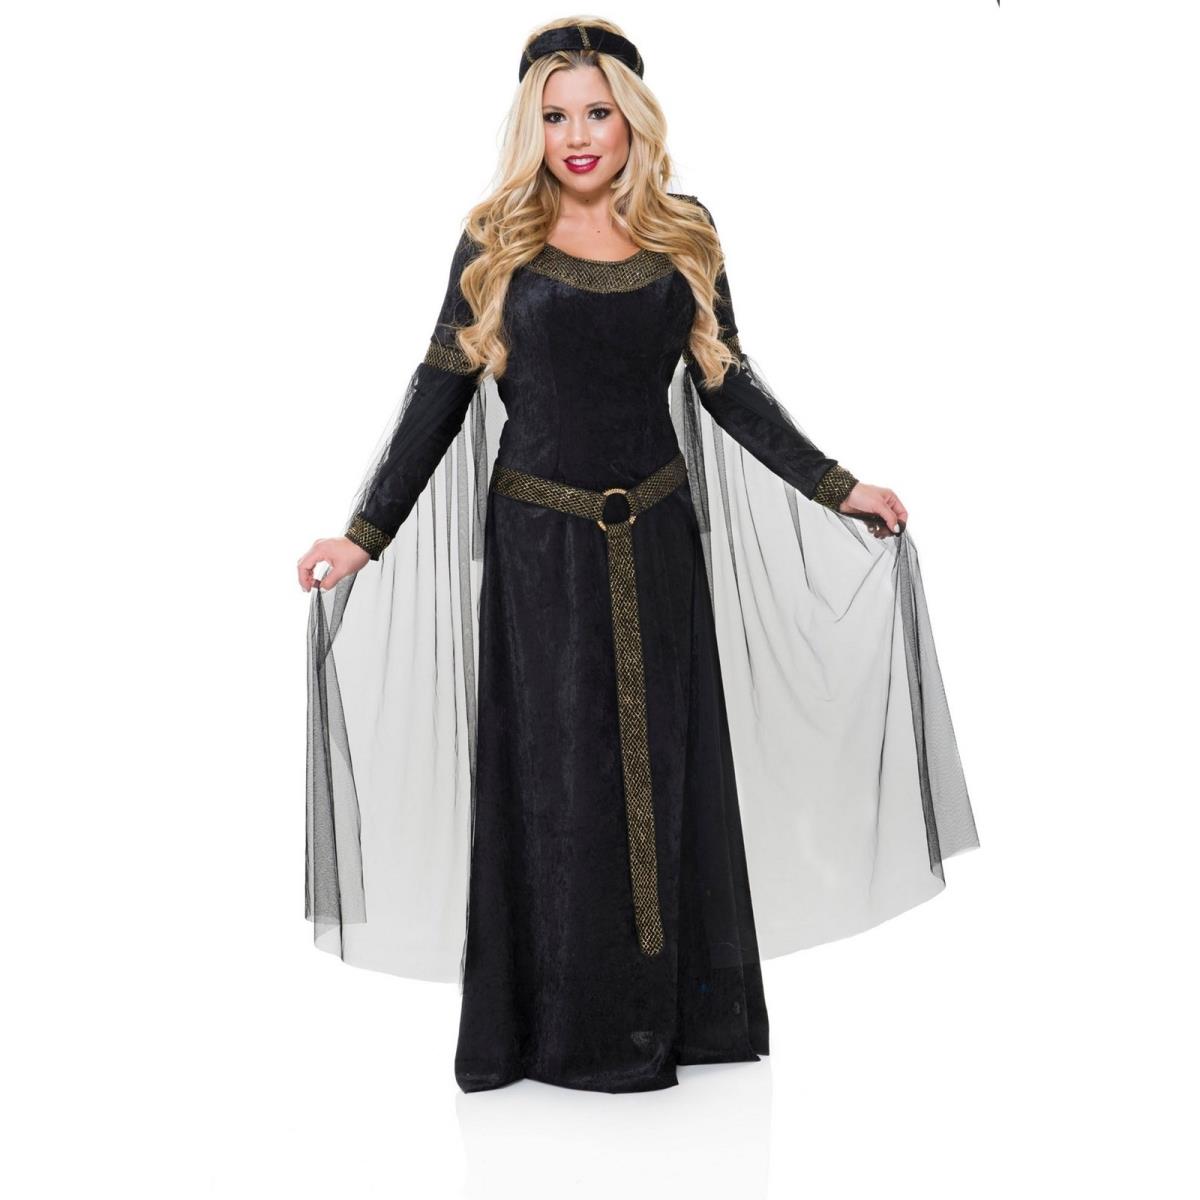 409296 Womens Renaissance Lady Adult Costume, Small